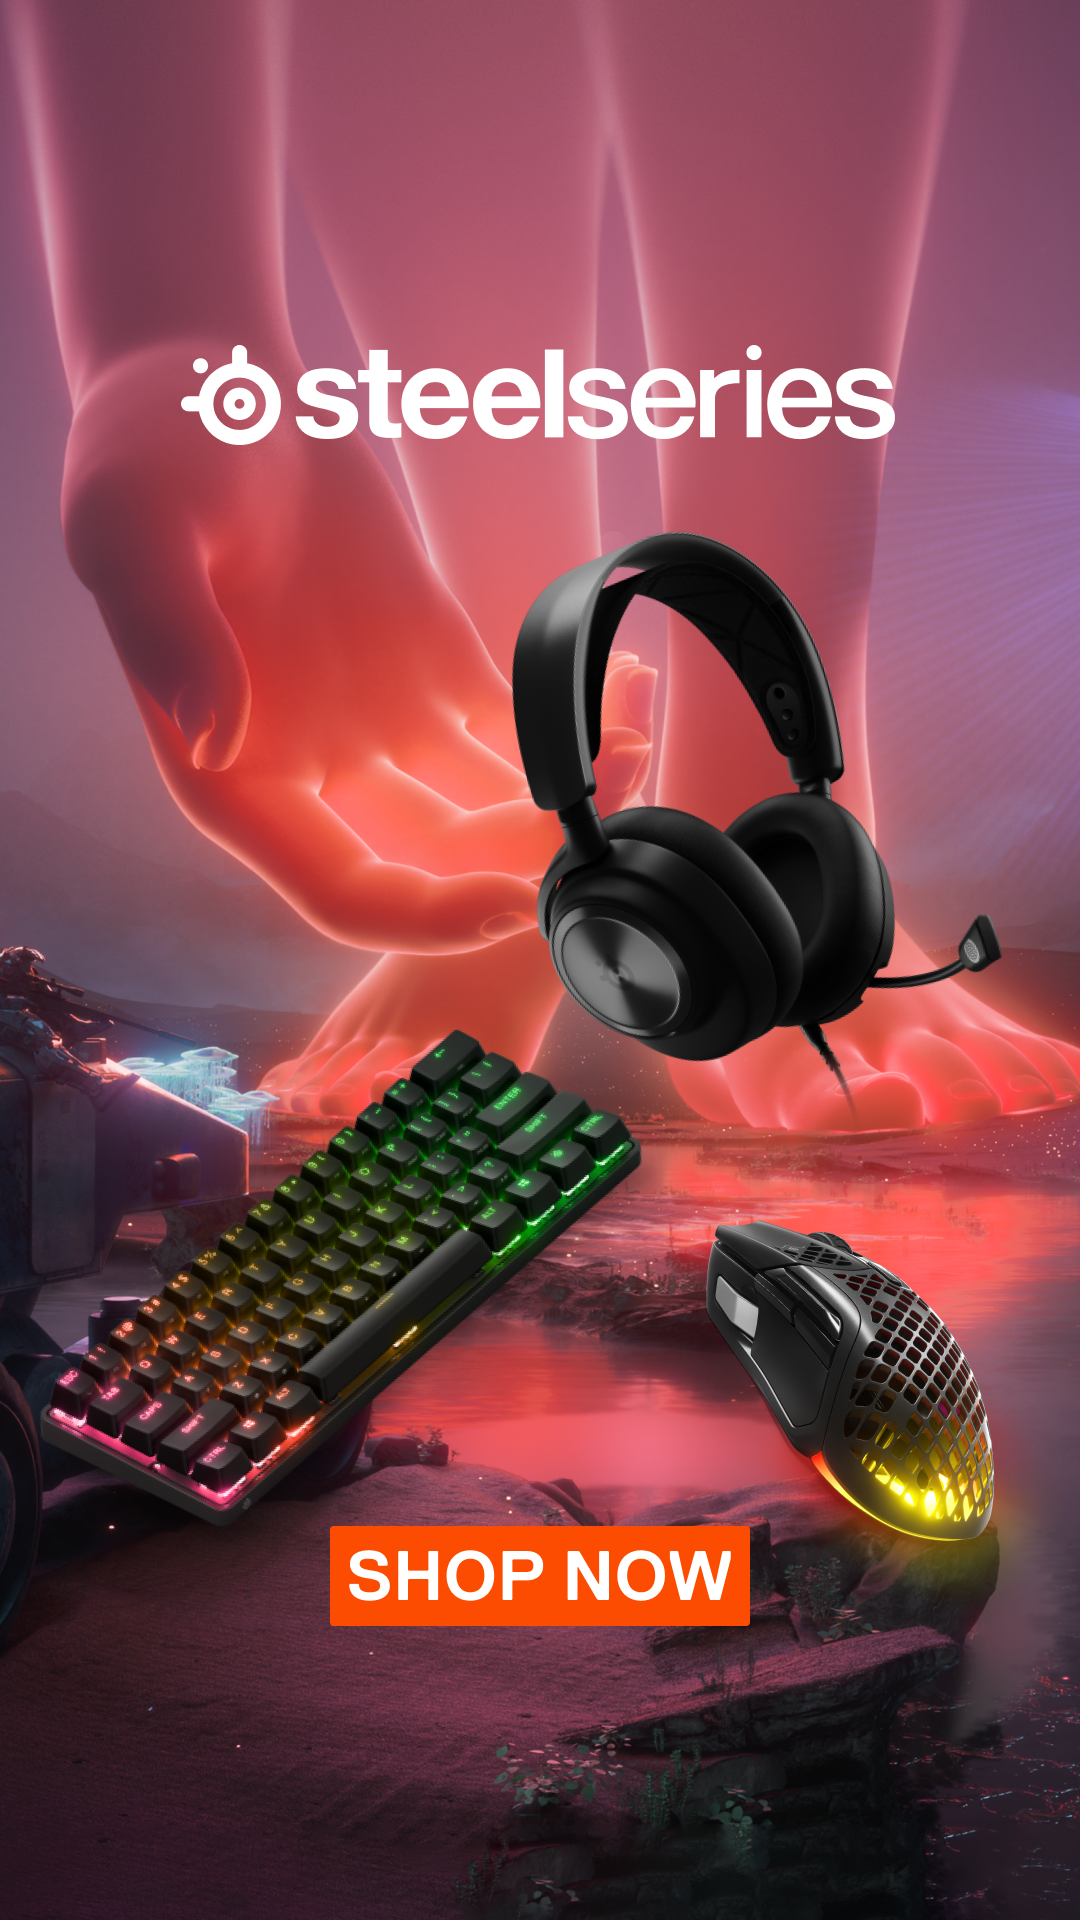 SteelSeries gaming equipment advertisement